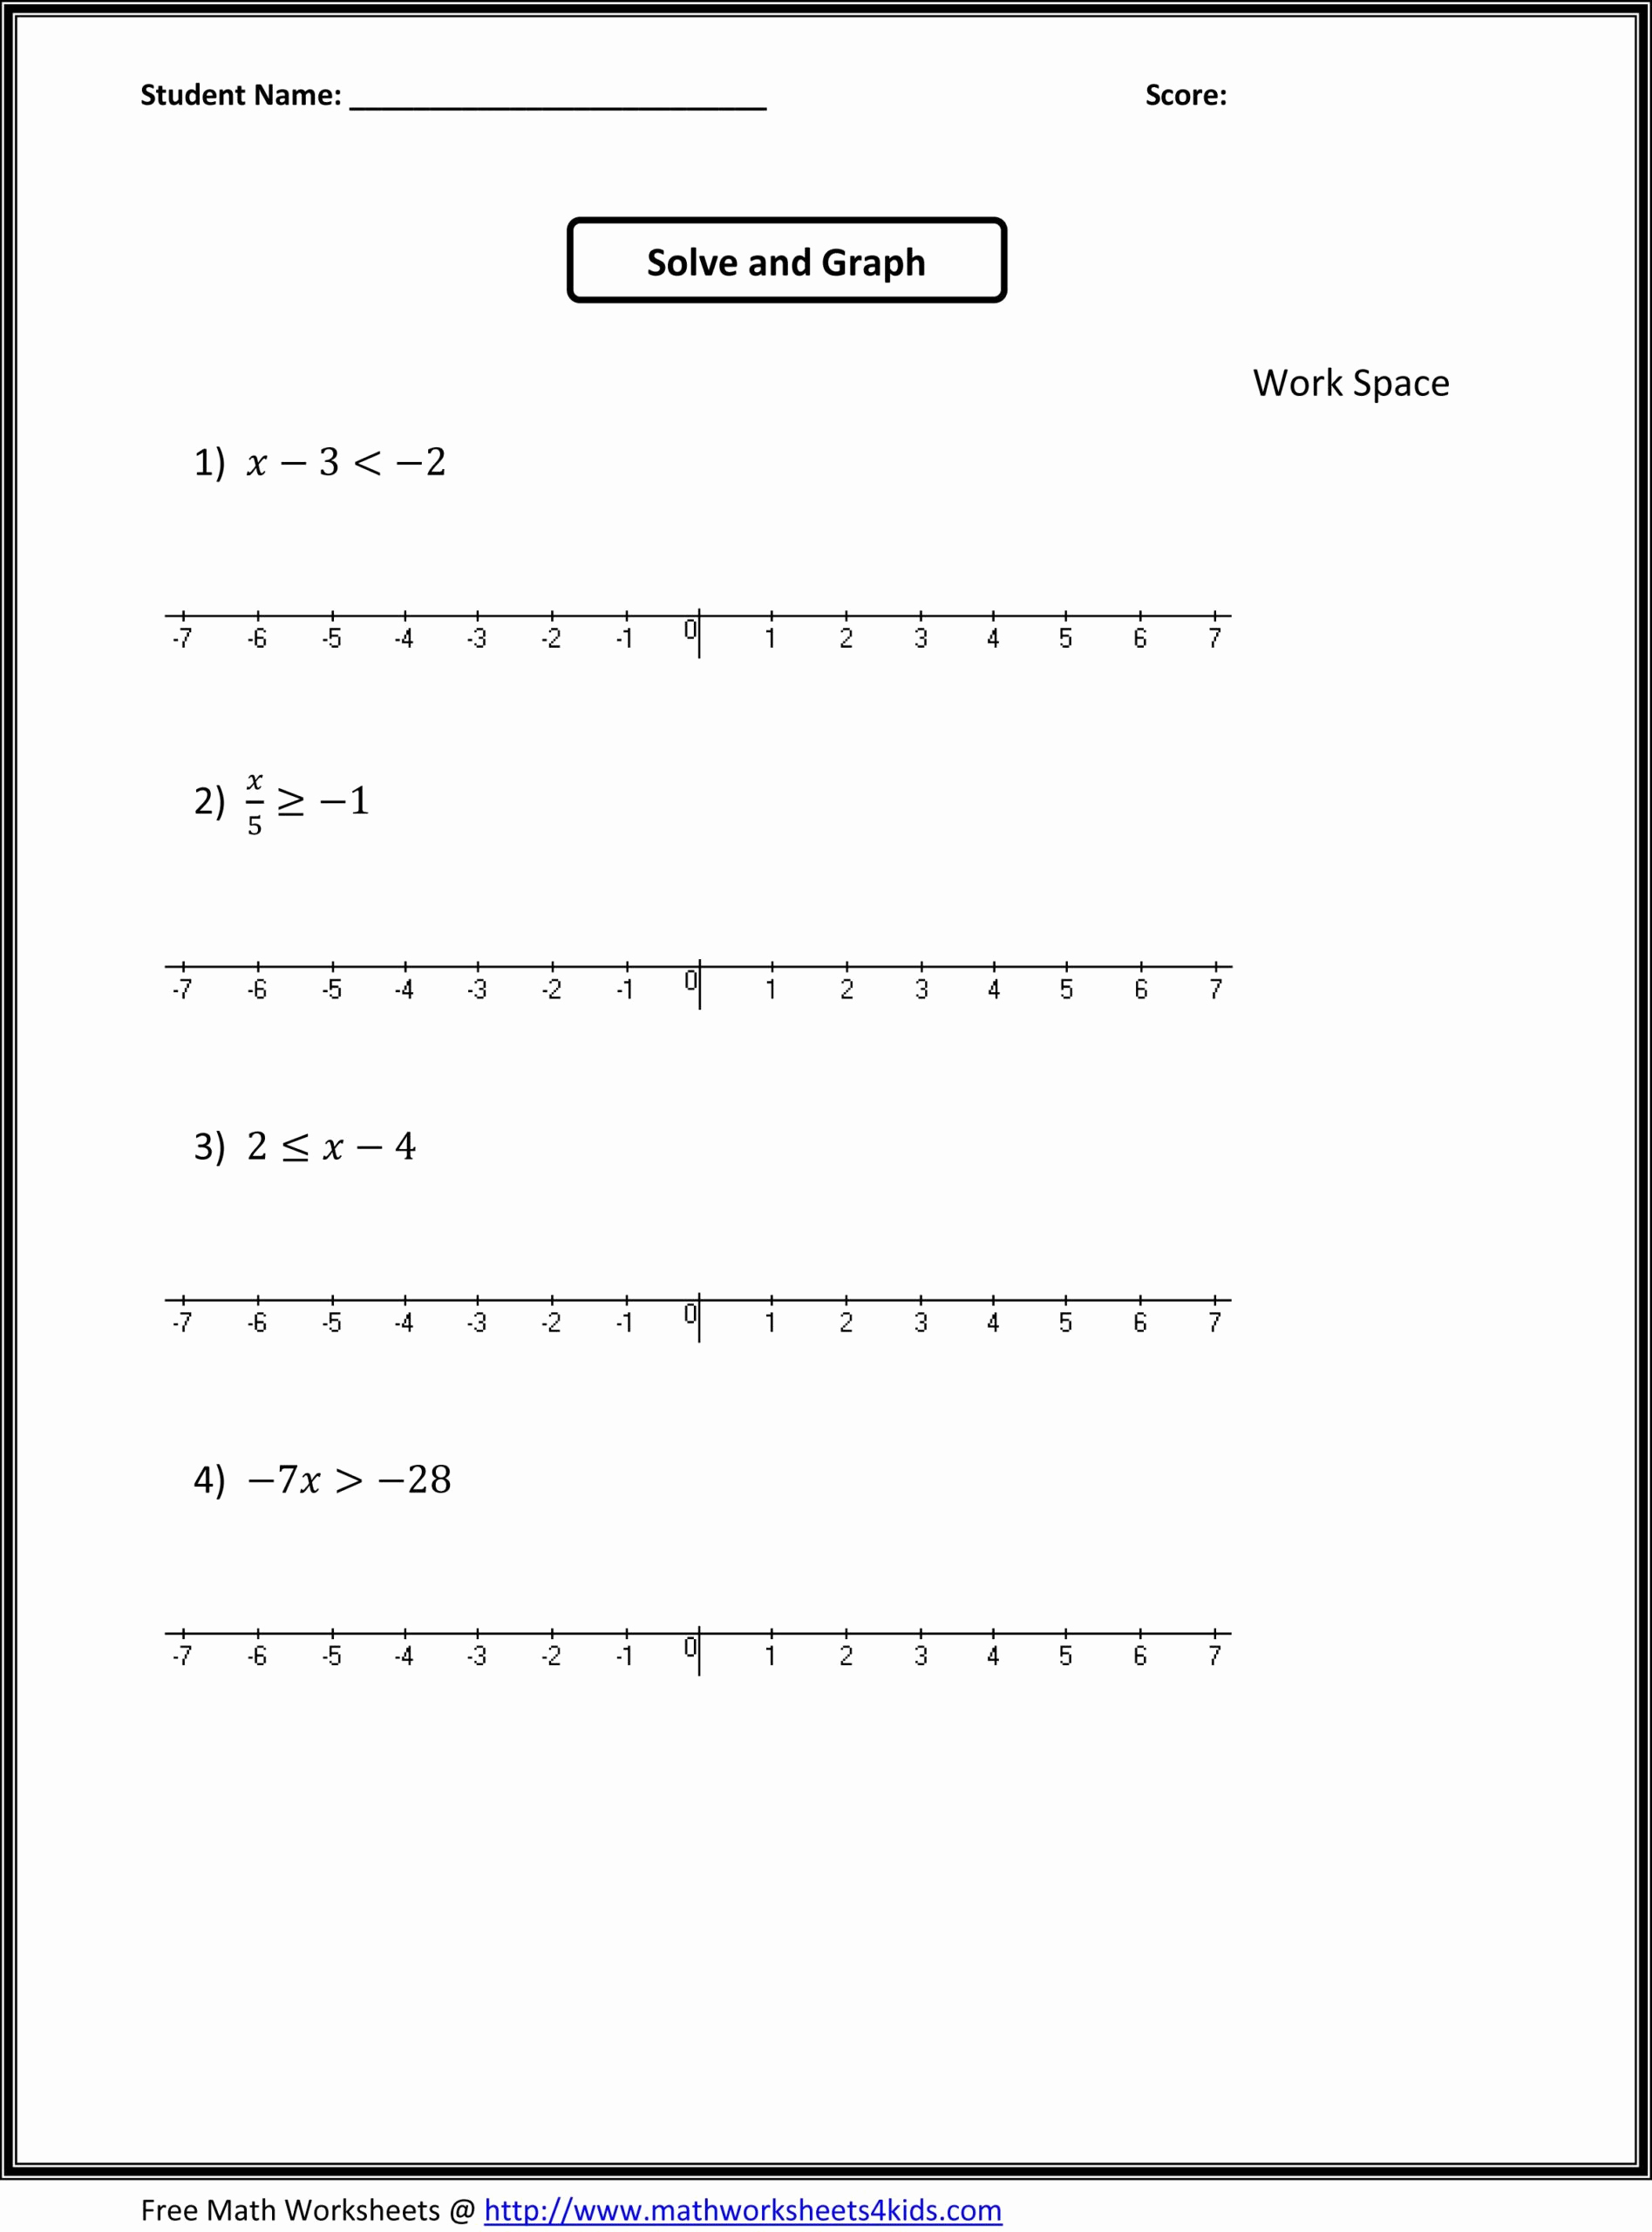 Abeka 3rd Grade Math Worksheets Inspirational 20 Abeka 3rd Grade Math Worksheets